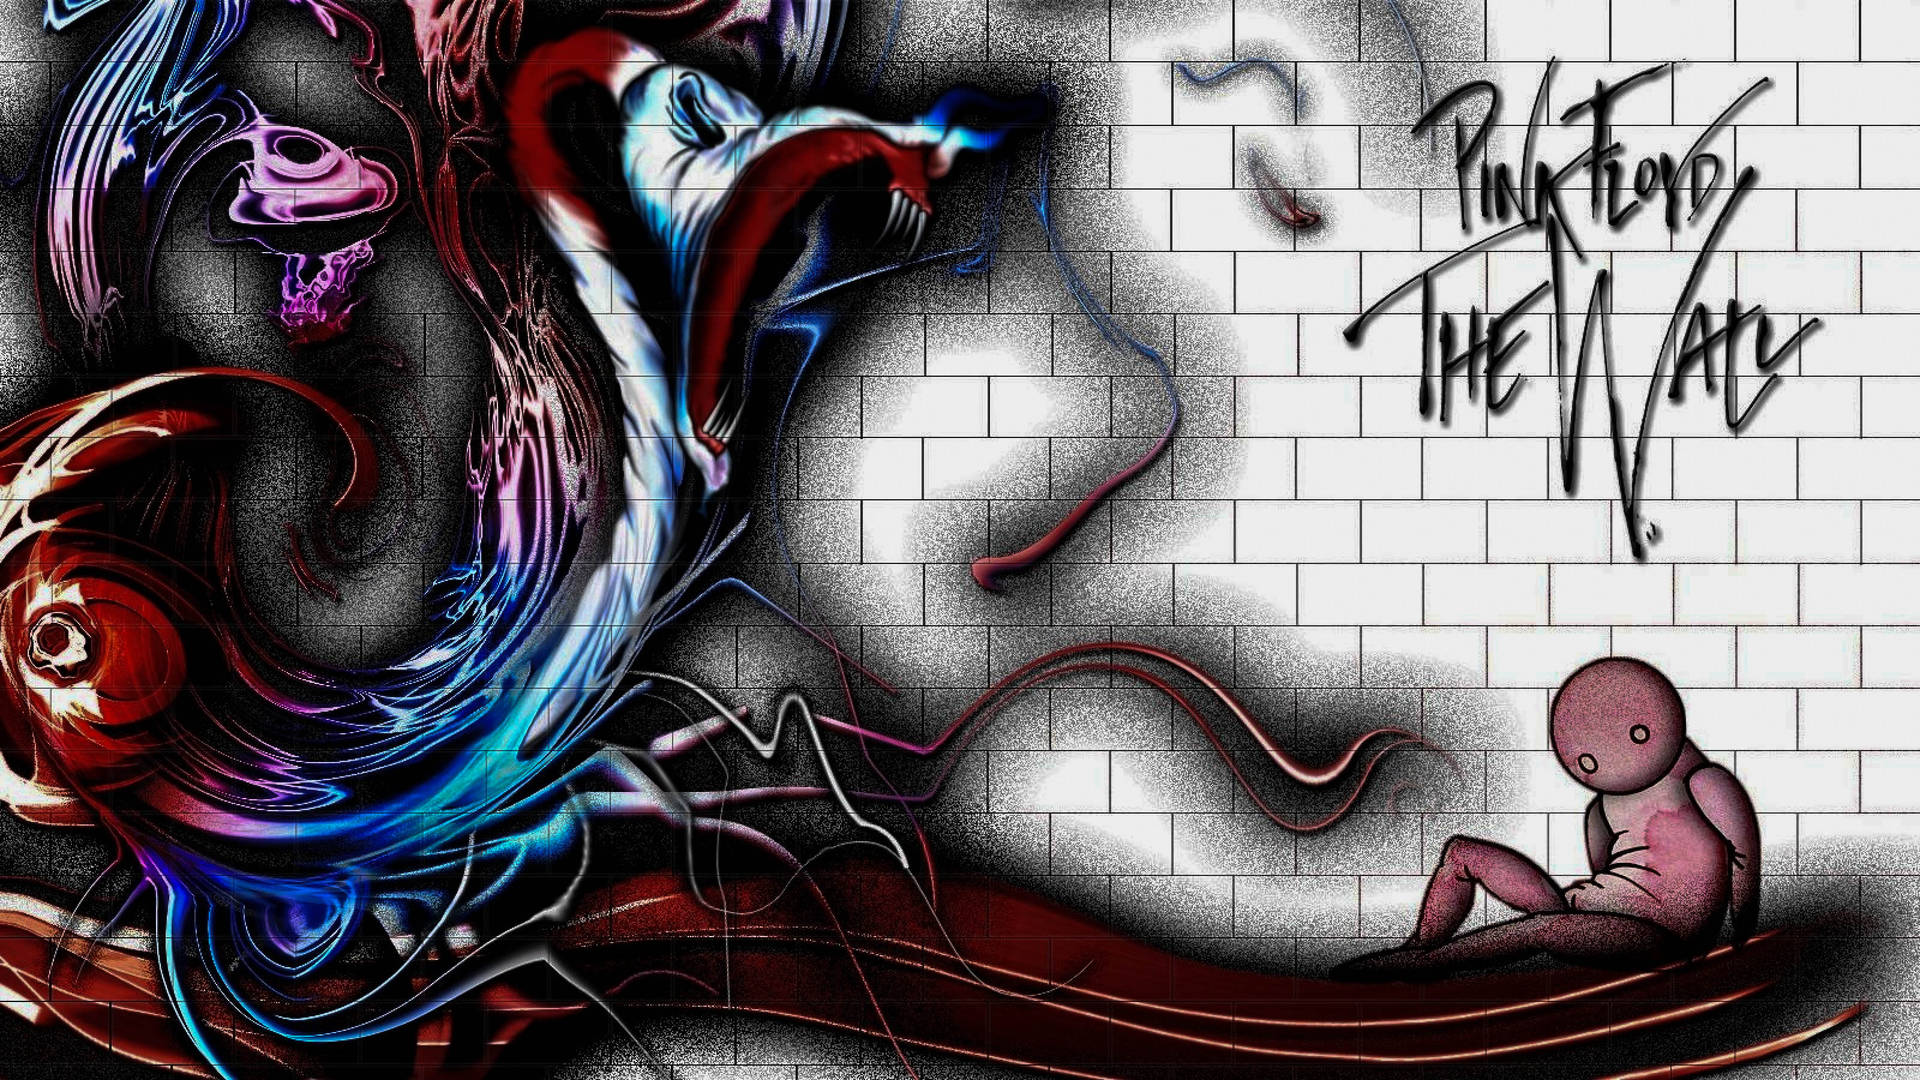 Pink Floyd 4k The Wall Graffiti Aesthetic Wallpaper